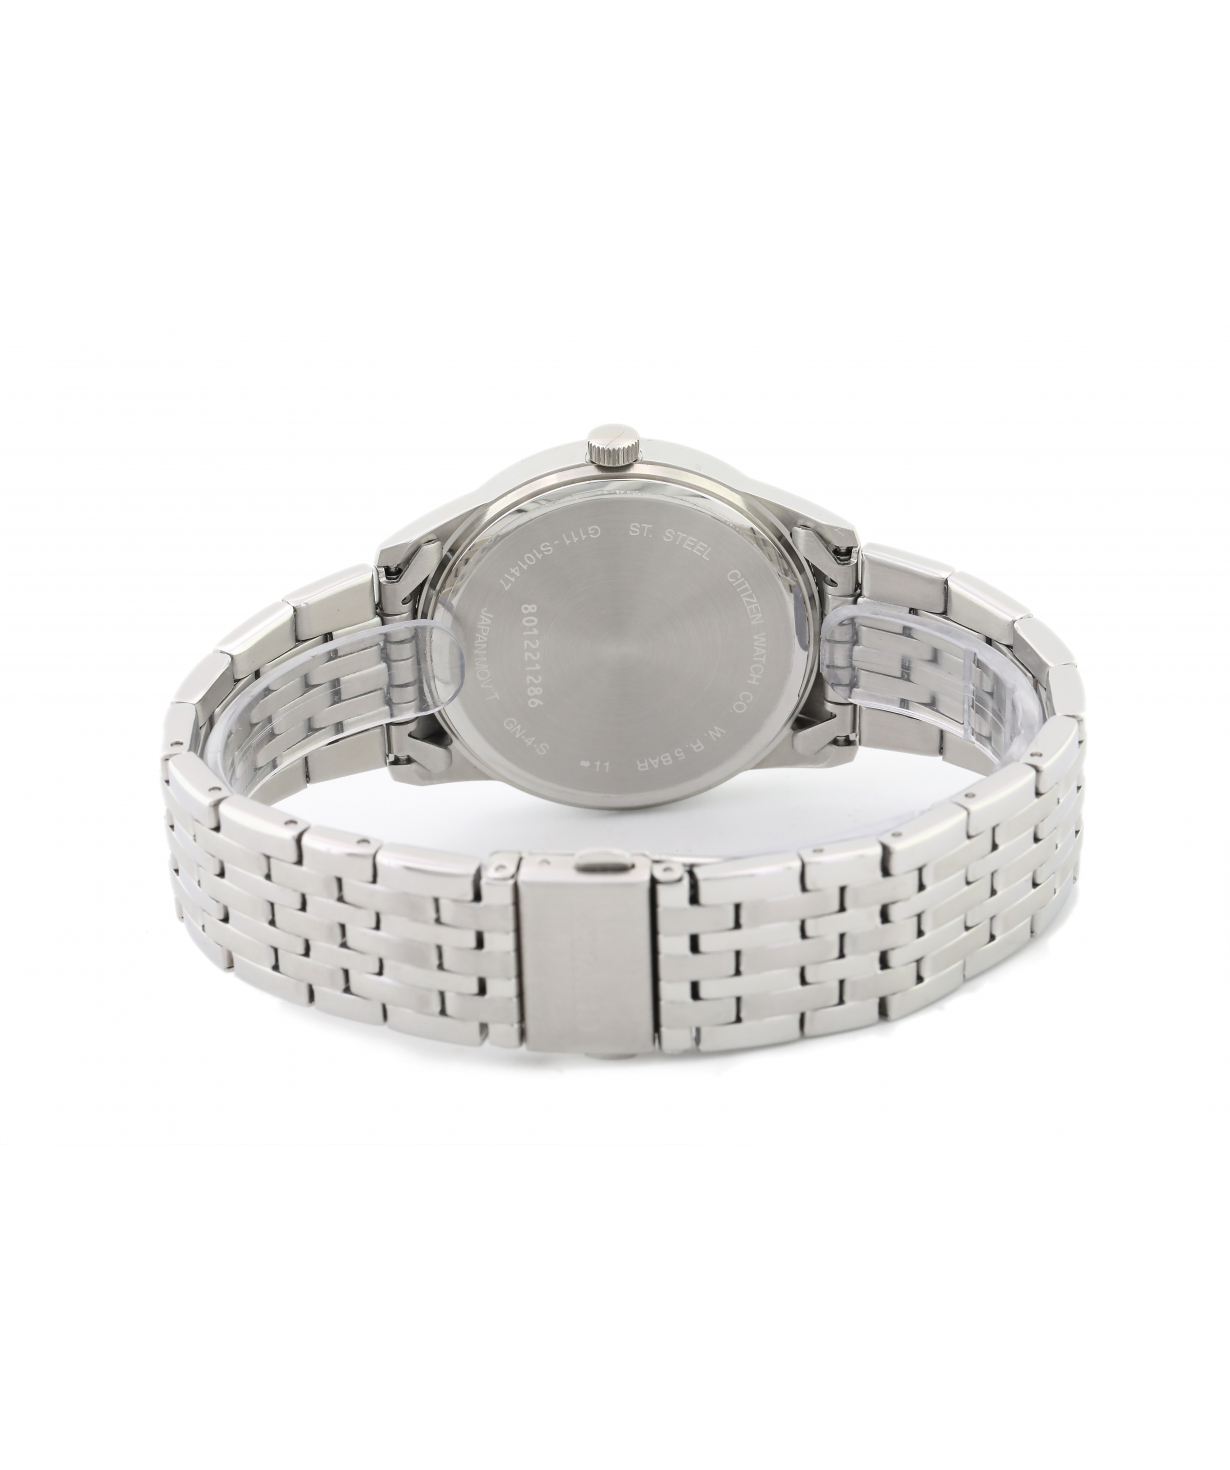 Wristwatch   `Citizen`   BI5000-87A